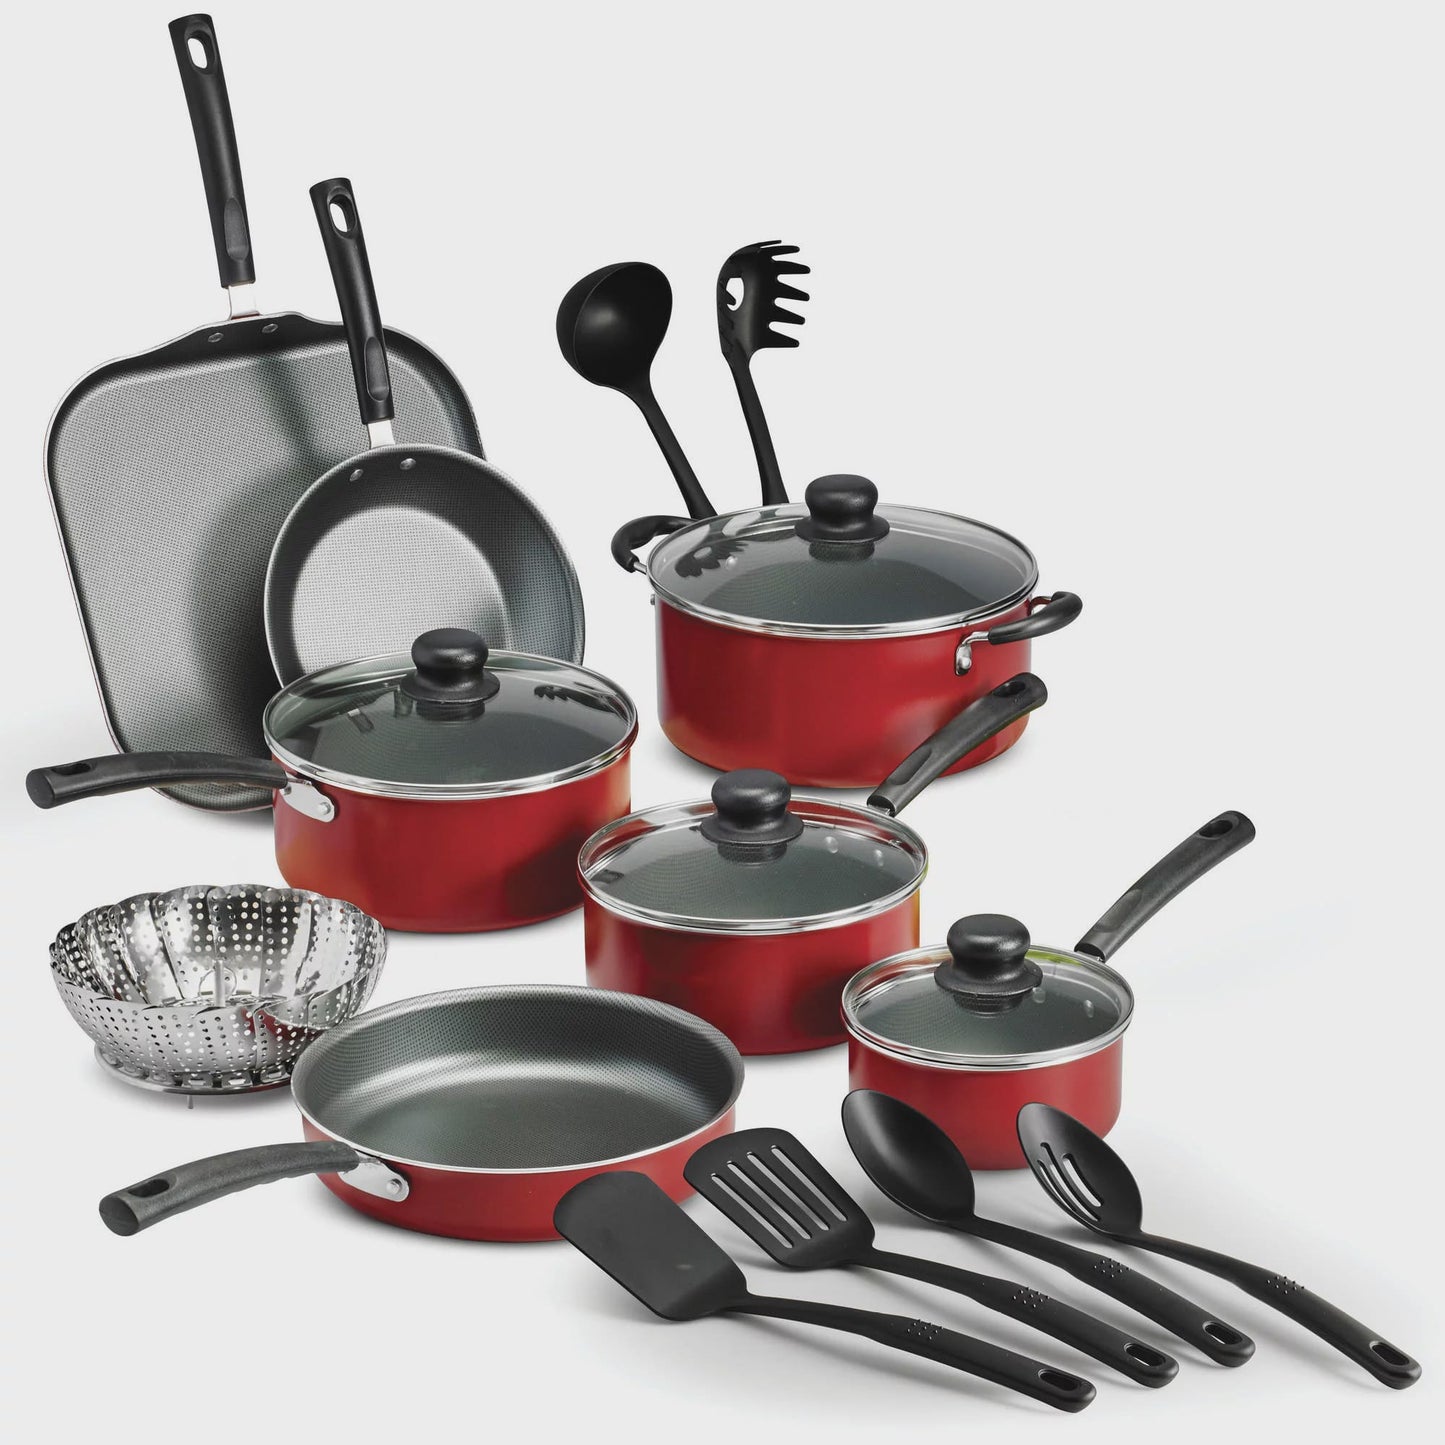 18 Piece Non-stick Cookware Set, Steel Gray Cookware Sets Pots and Pans Kitchen